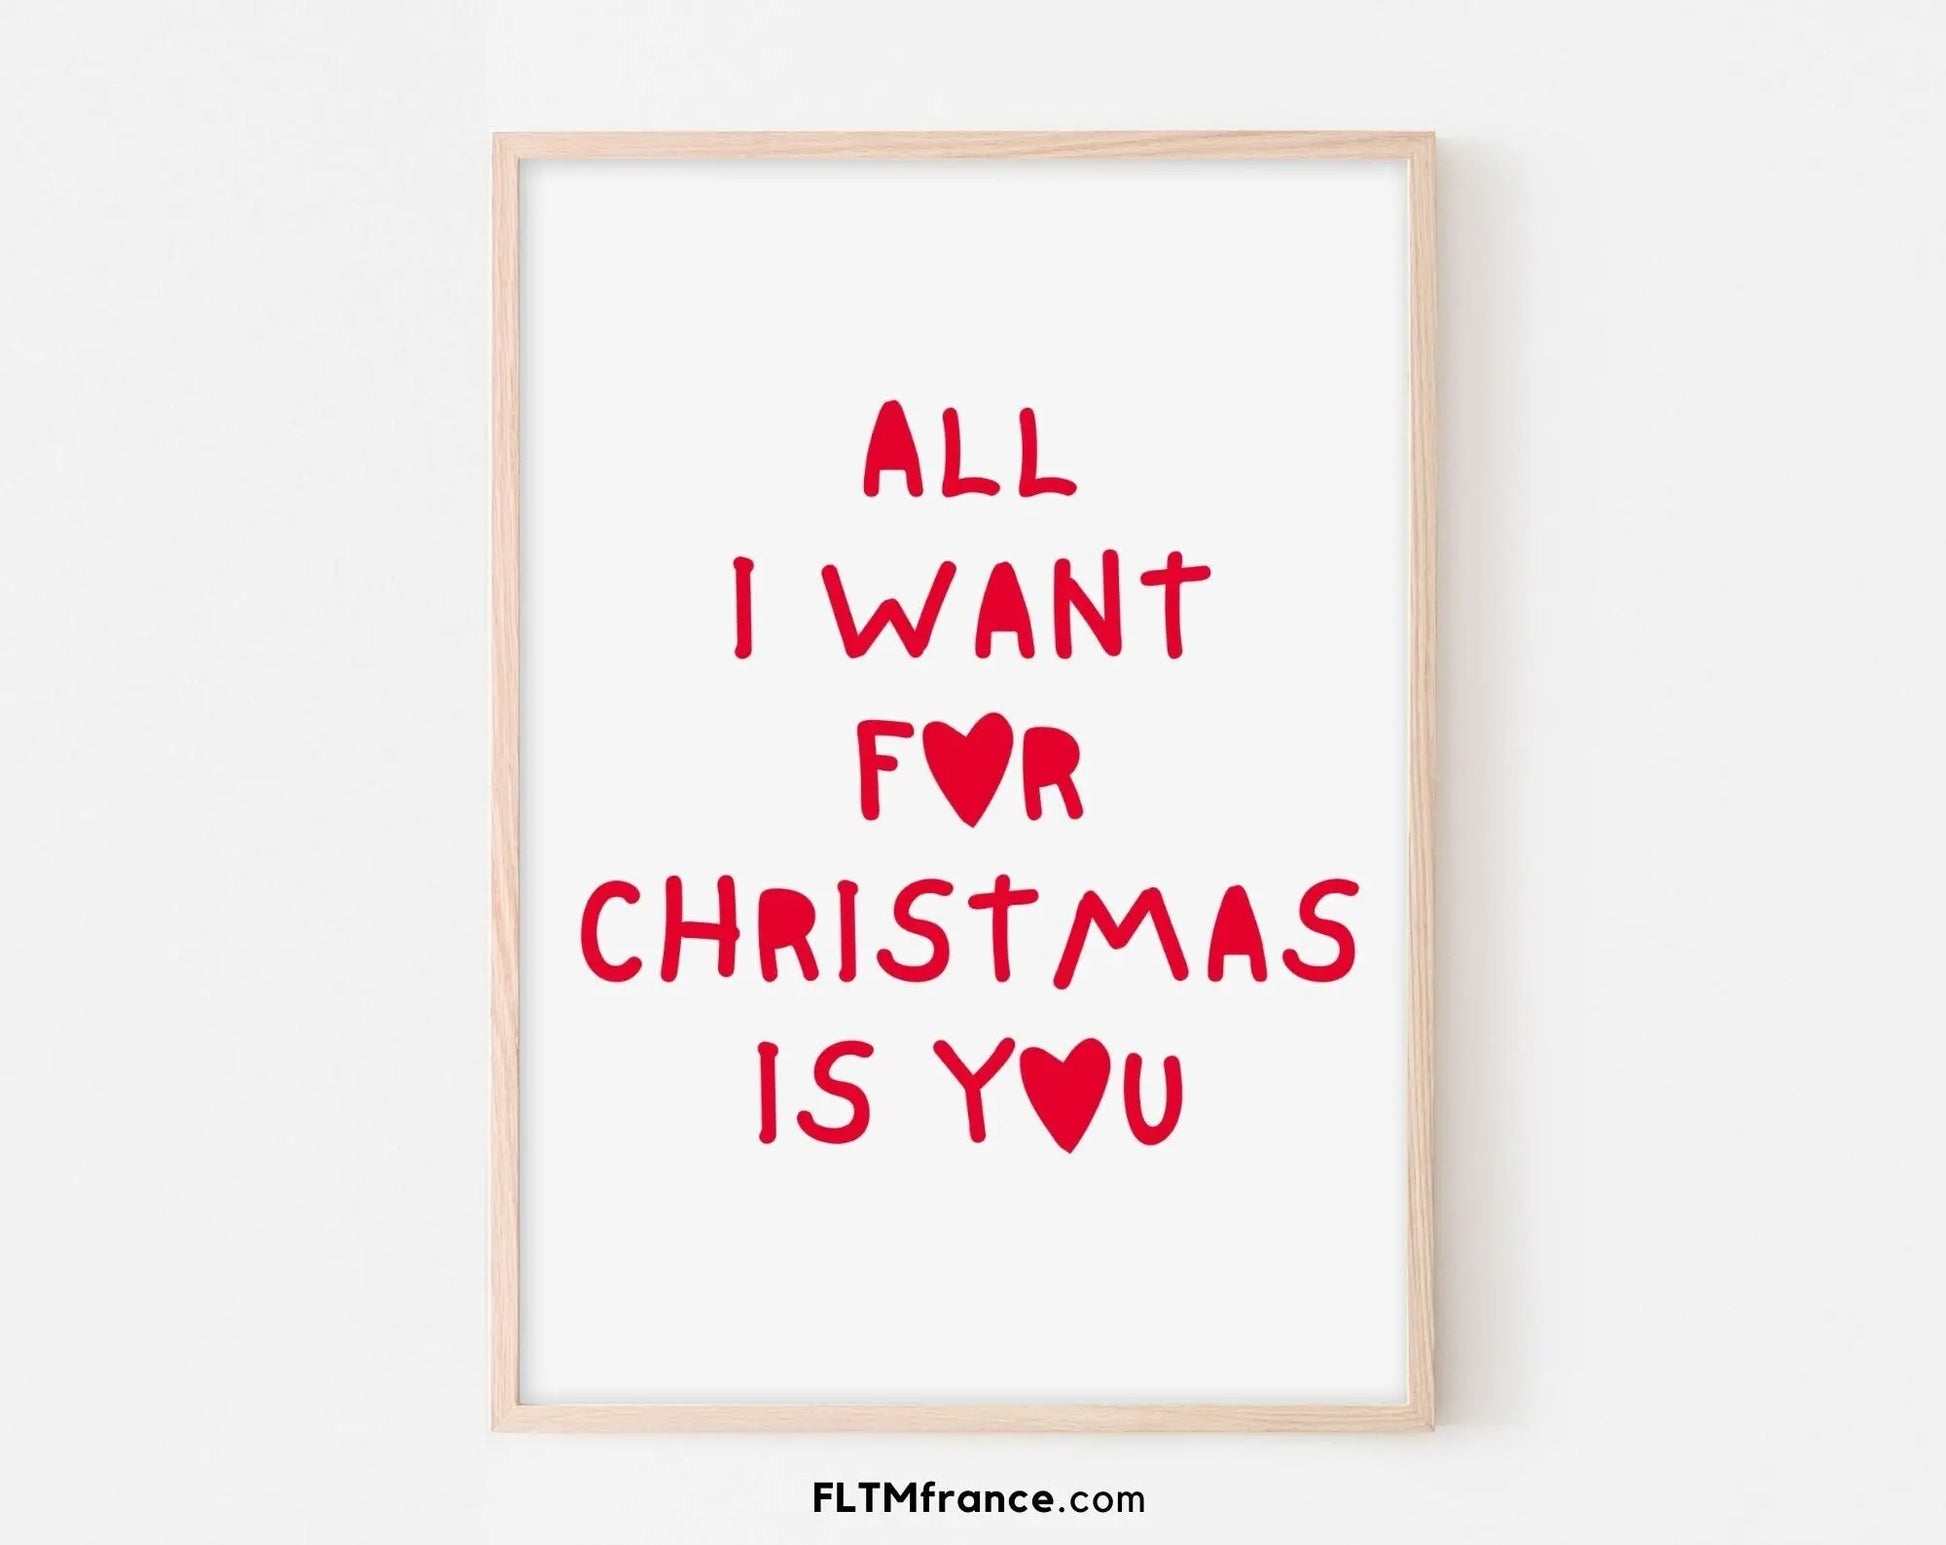 All I want for Christmas is you affiche - Décoration de noël - FLTMfrance